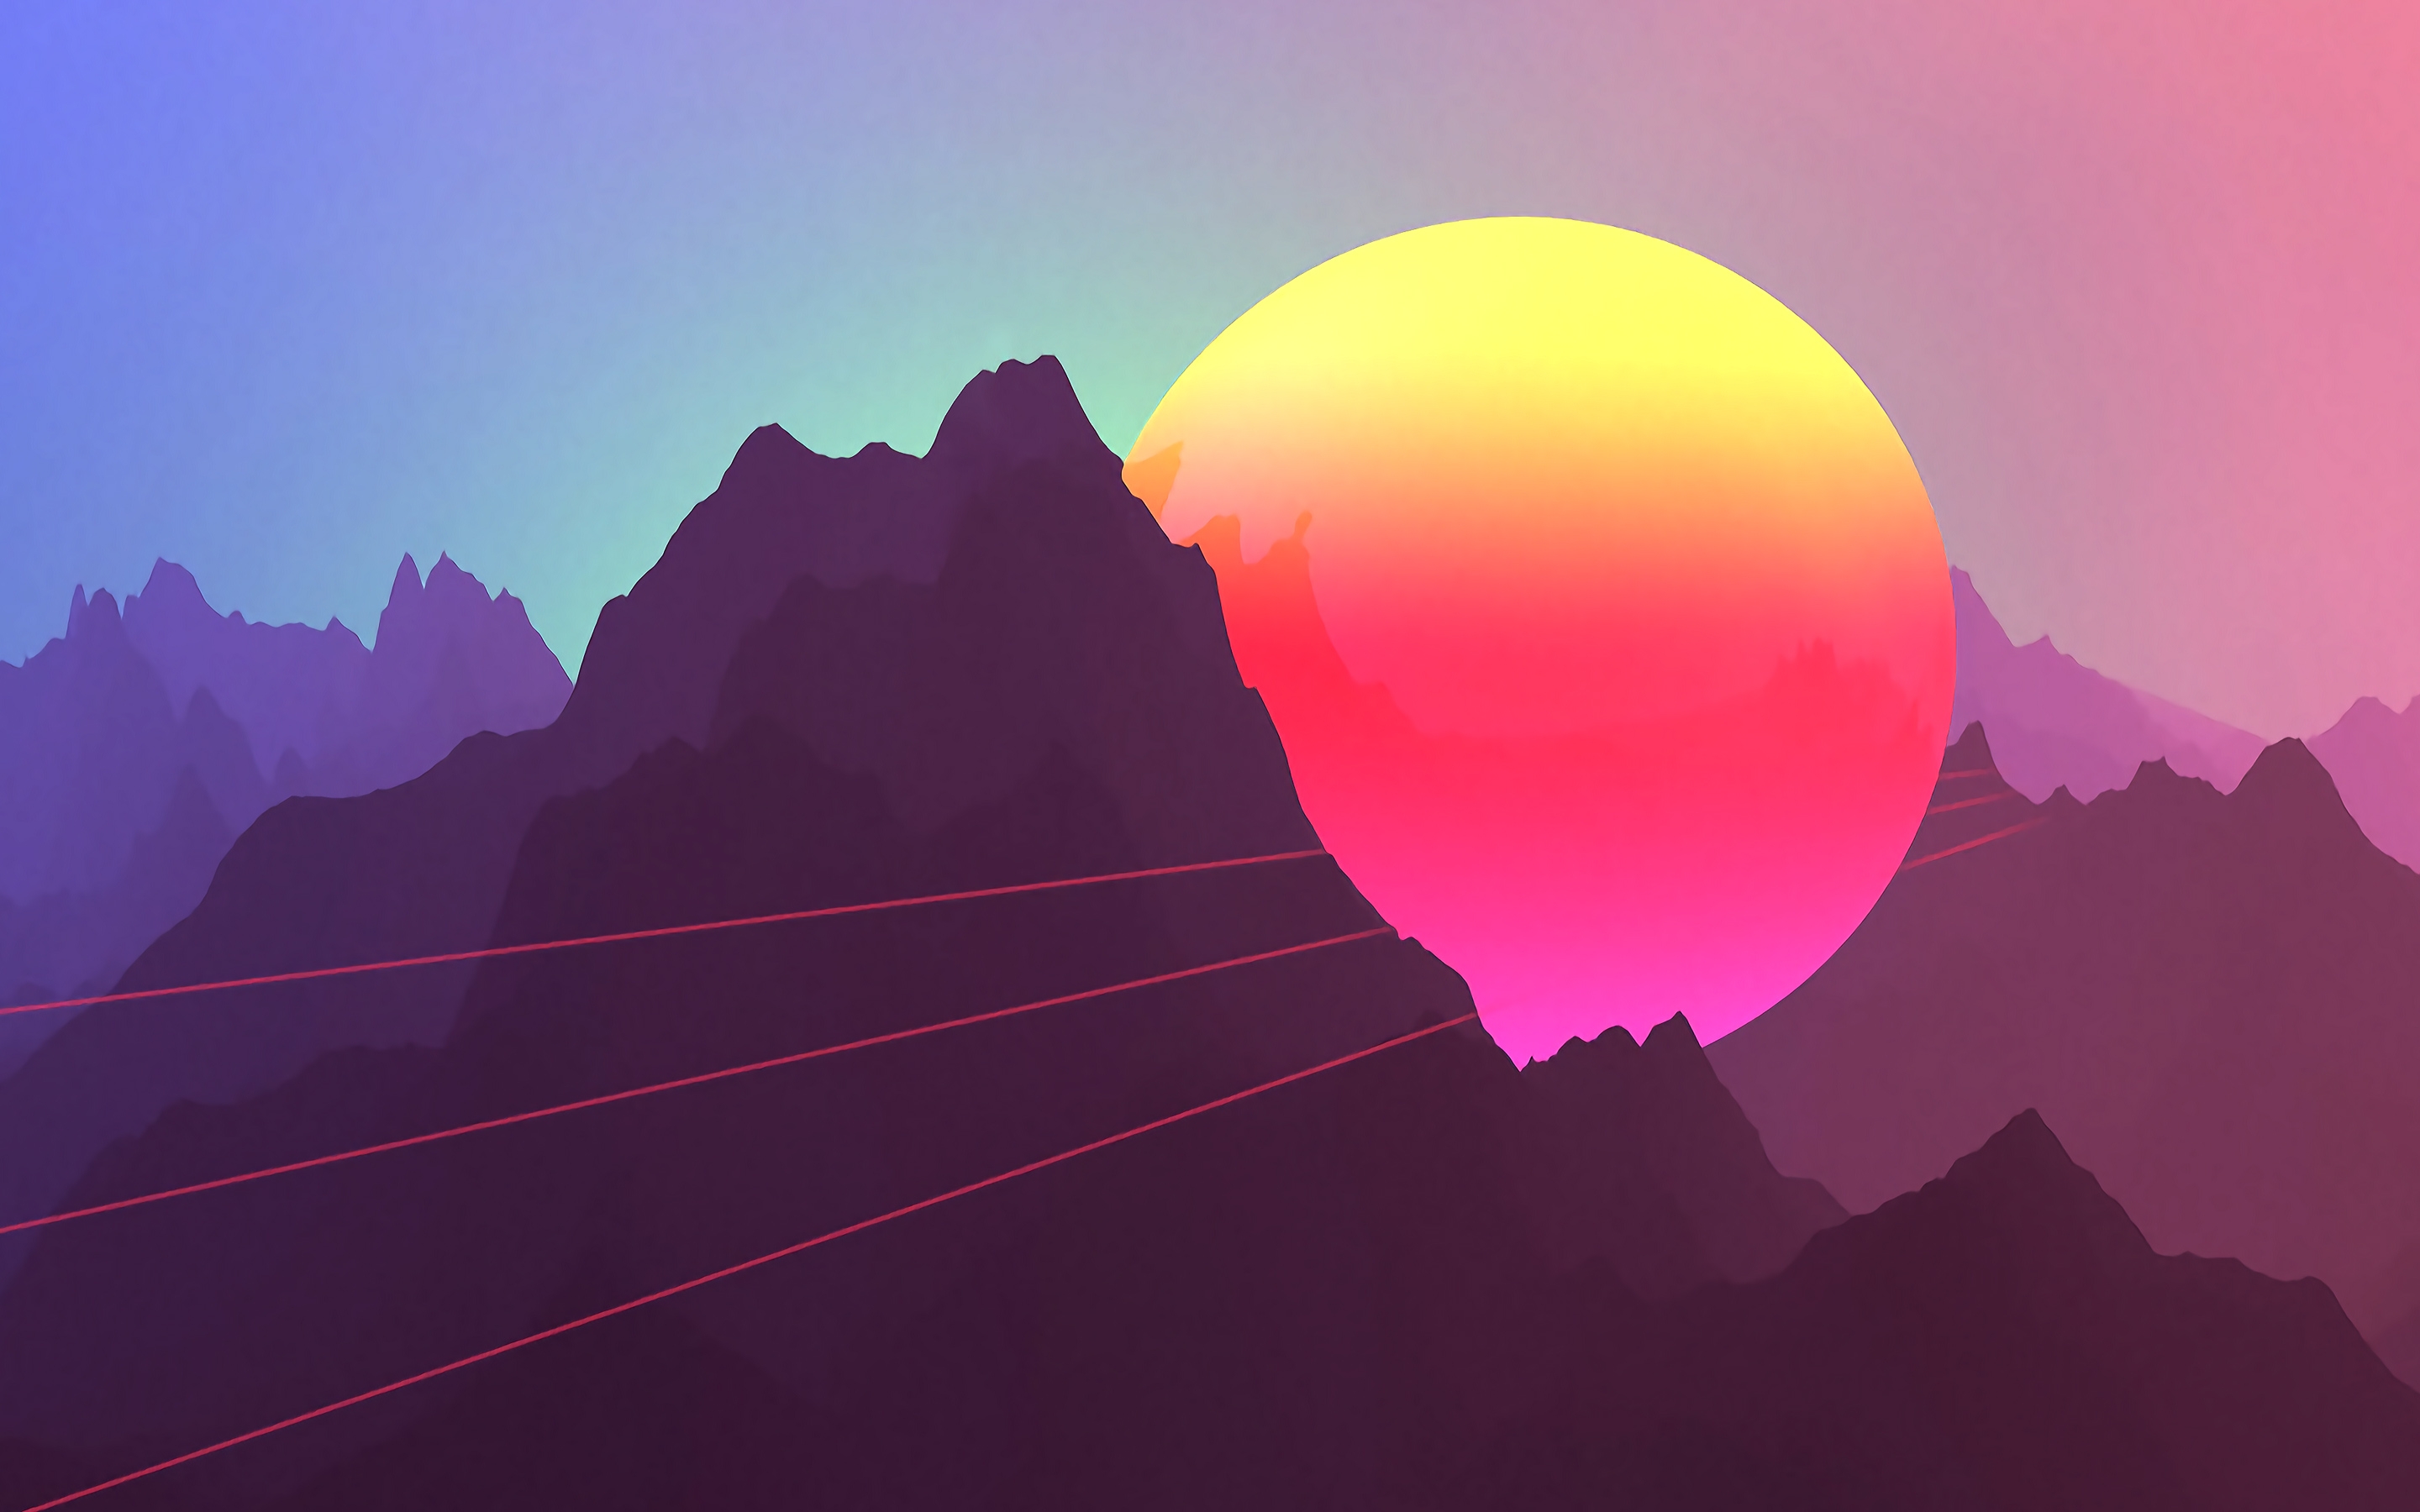 Download 2880x1800 Neon Landscape, Sunset, Mountain, Digital Art Wallpaper for MacBook Pro 15 inch